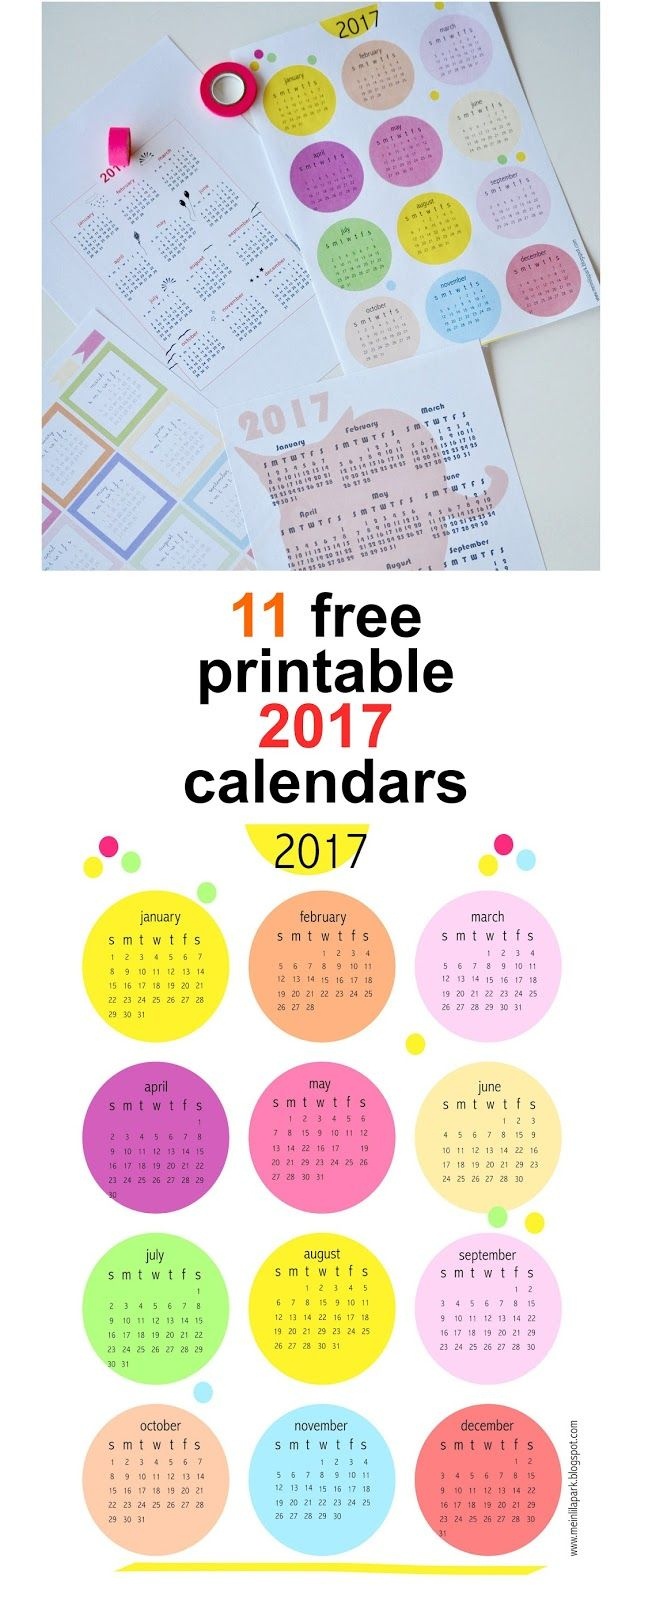 Free Printable 2017 Calendars - Round-Up | Calendars | Calendar 2017 - Free Printable Agenda 2017